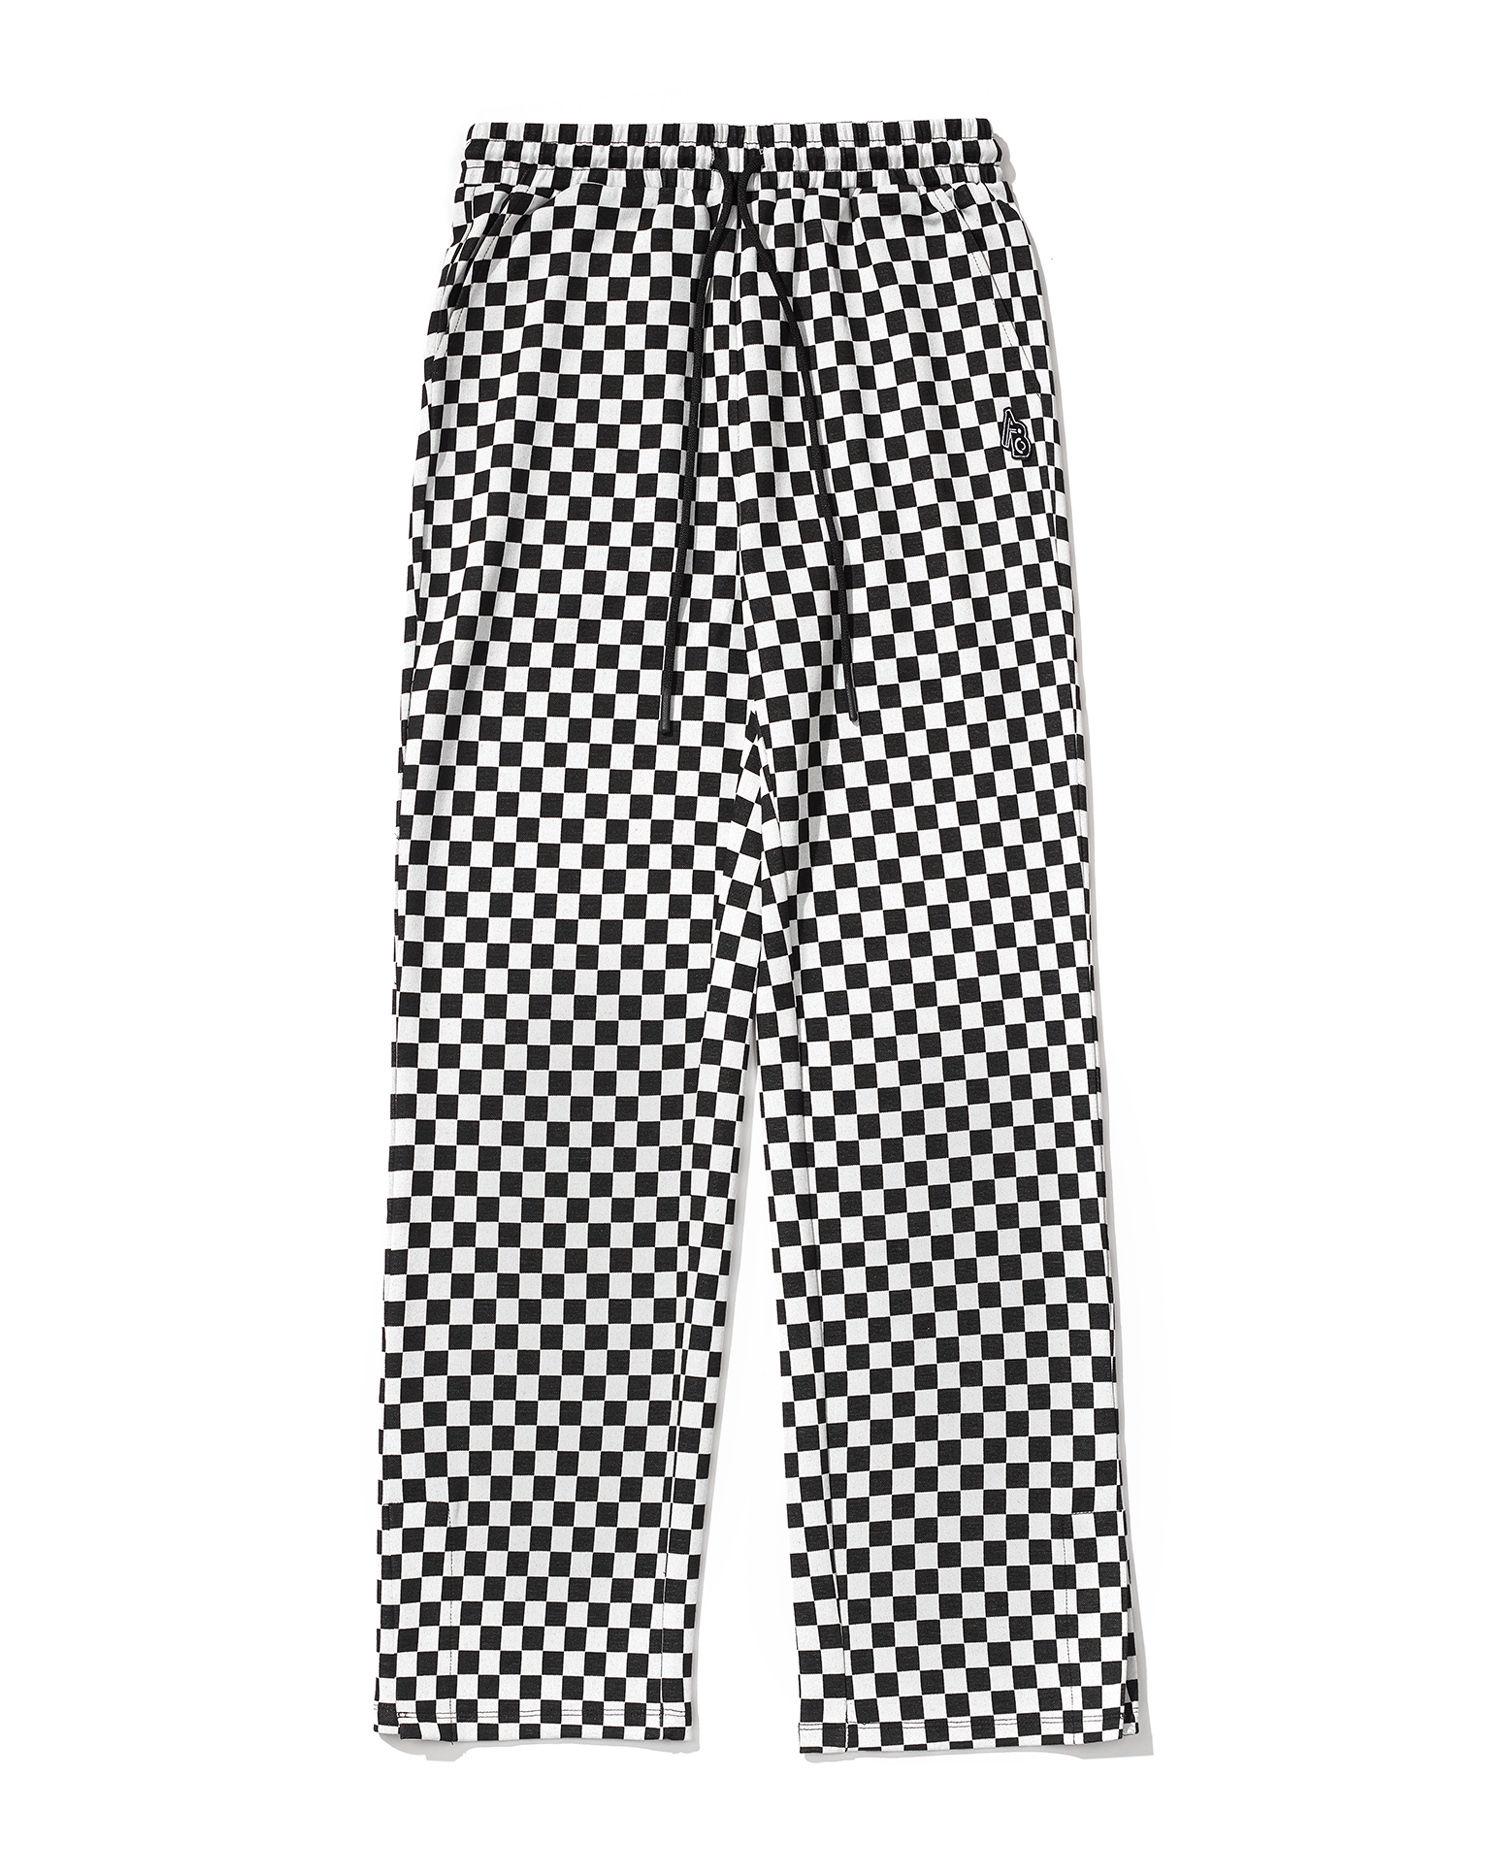 Checkered drawstring pants by CCAABB